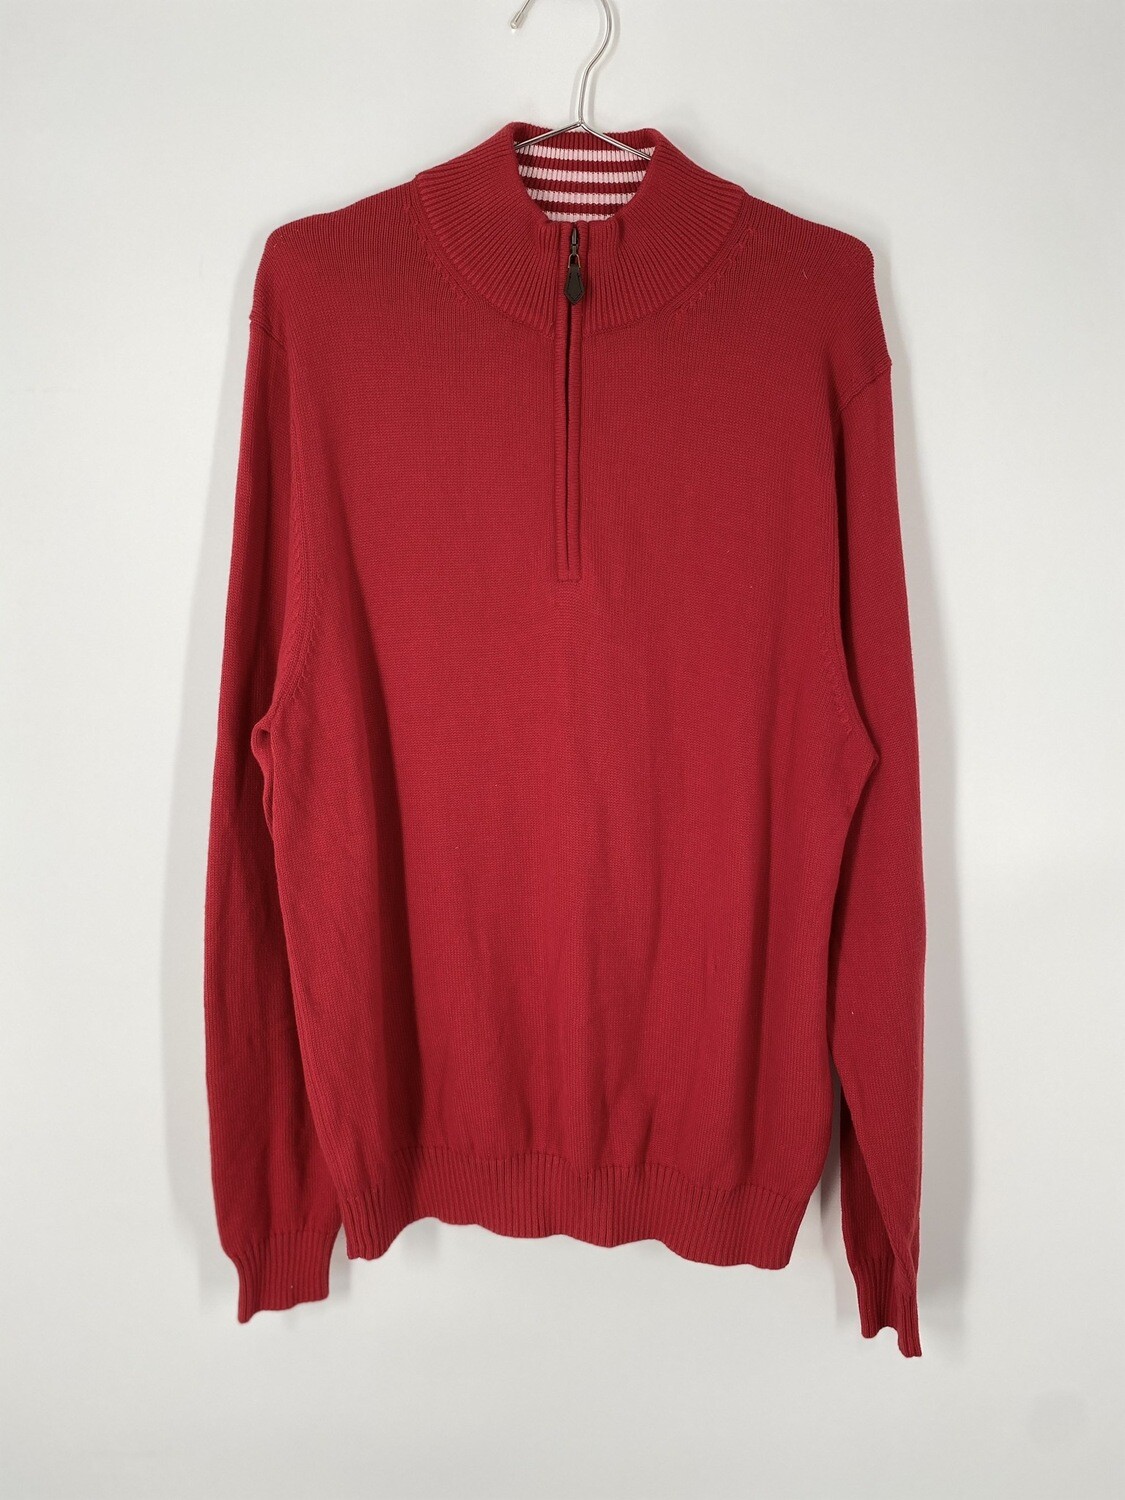 Brooks Brothers Zip Sweater Size Medium